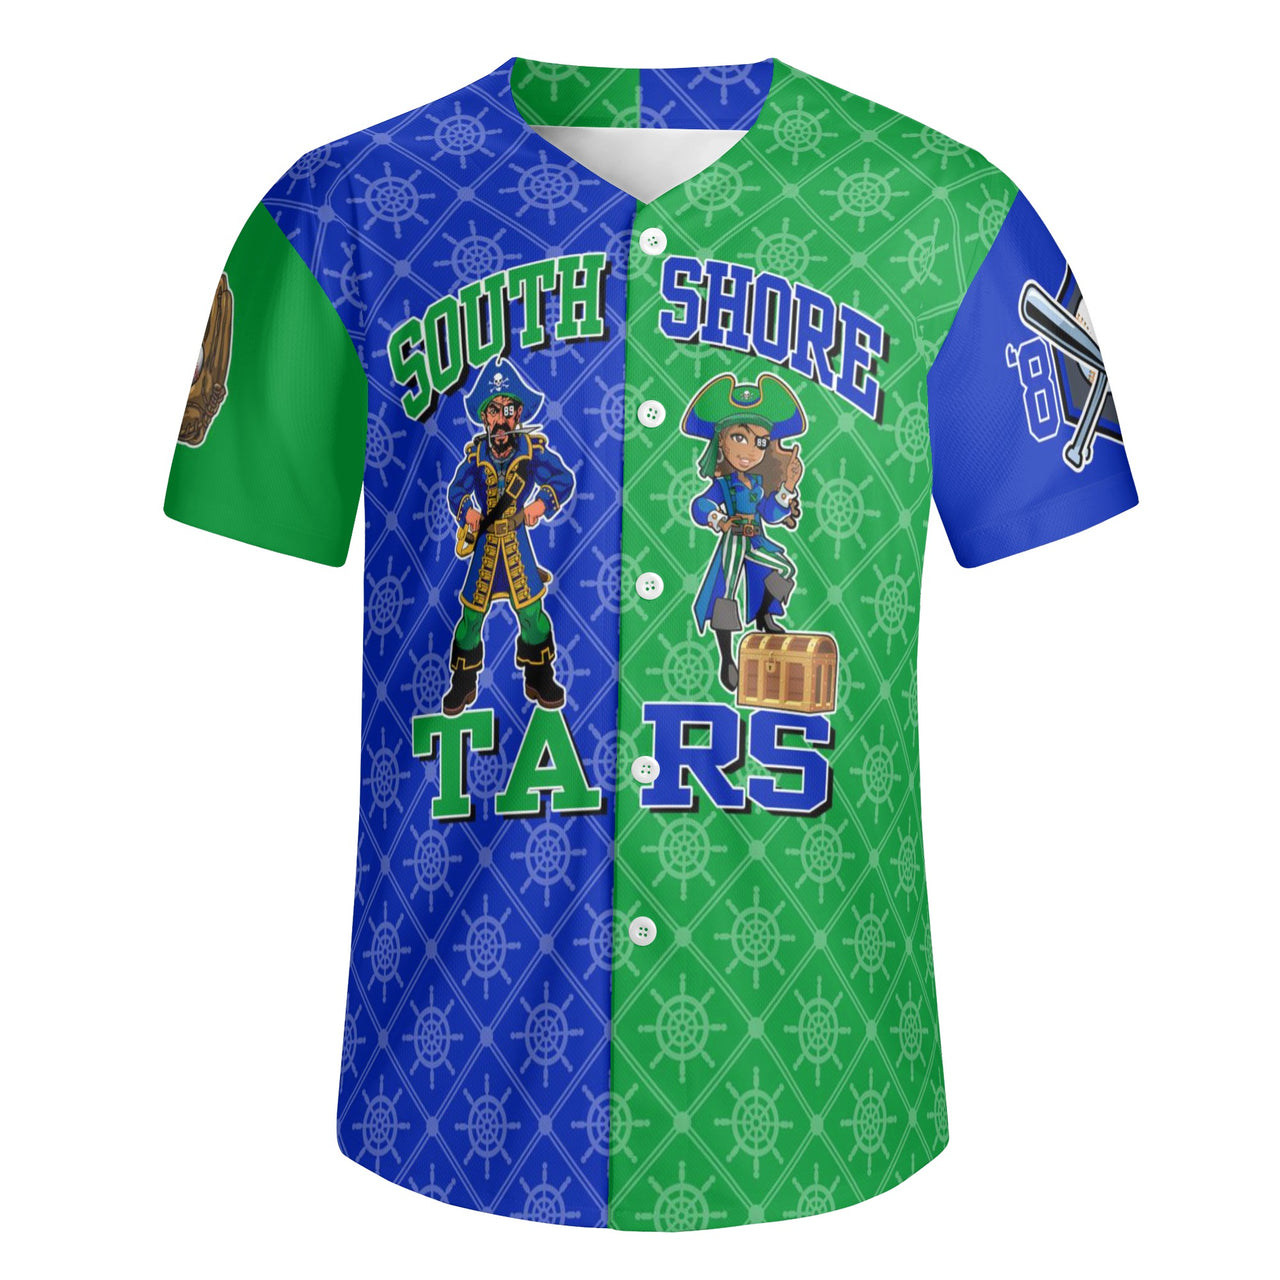 David South Shore Short Sleeve Baseball Jersey2